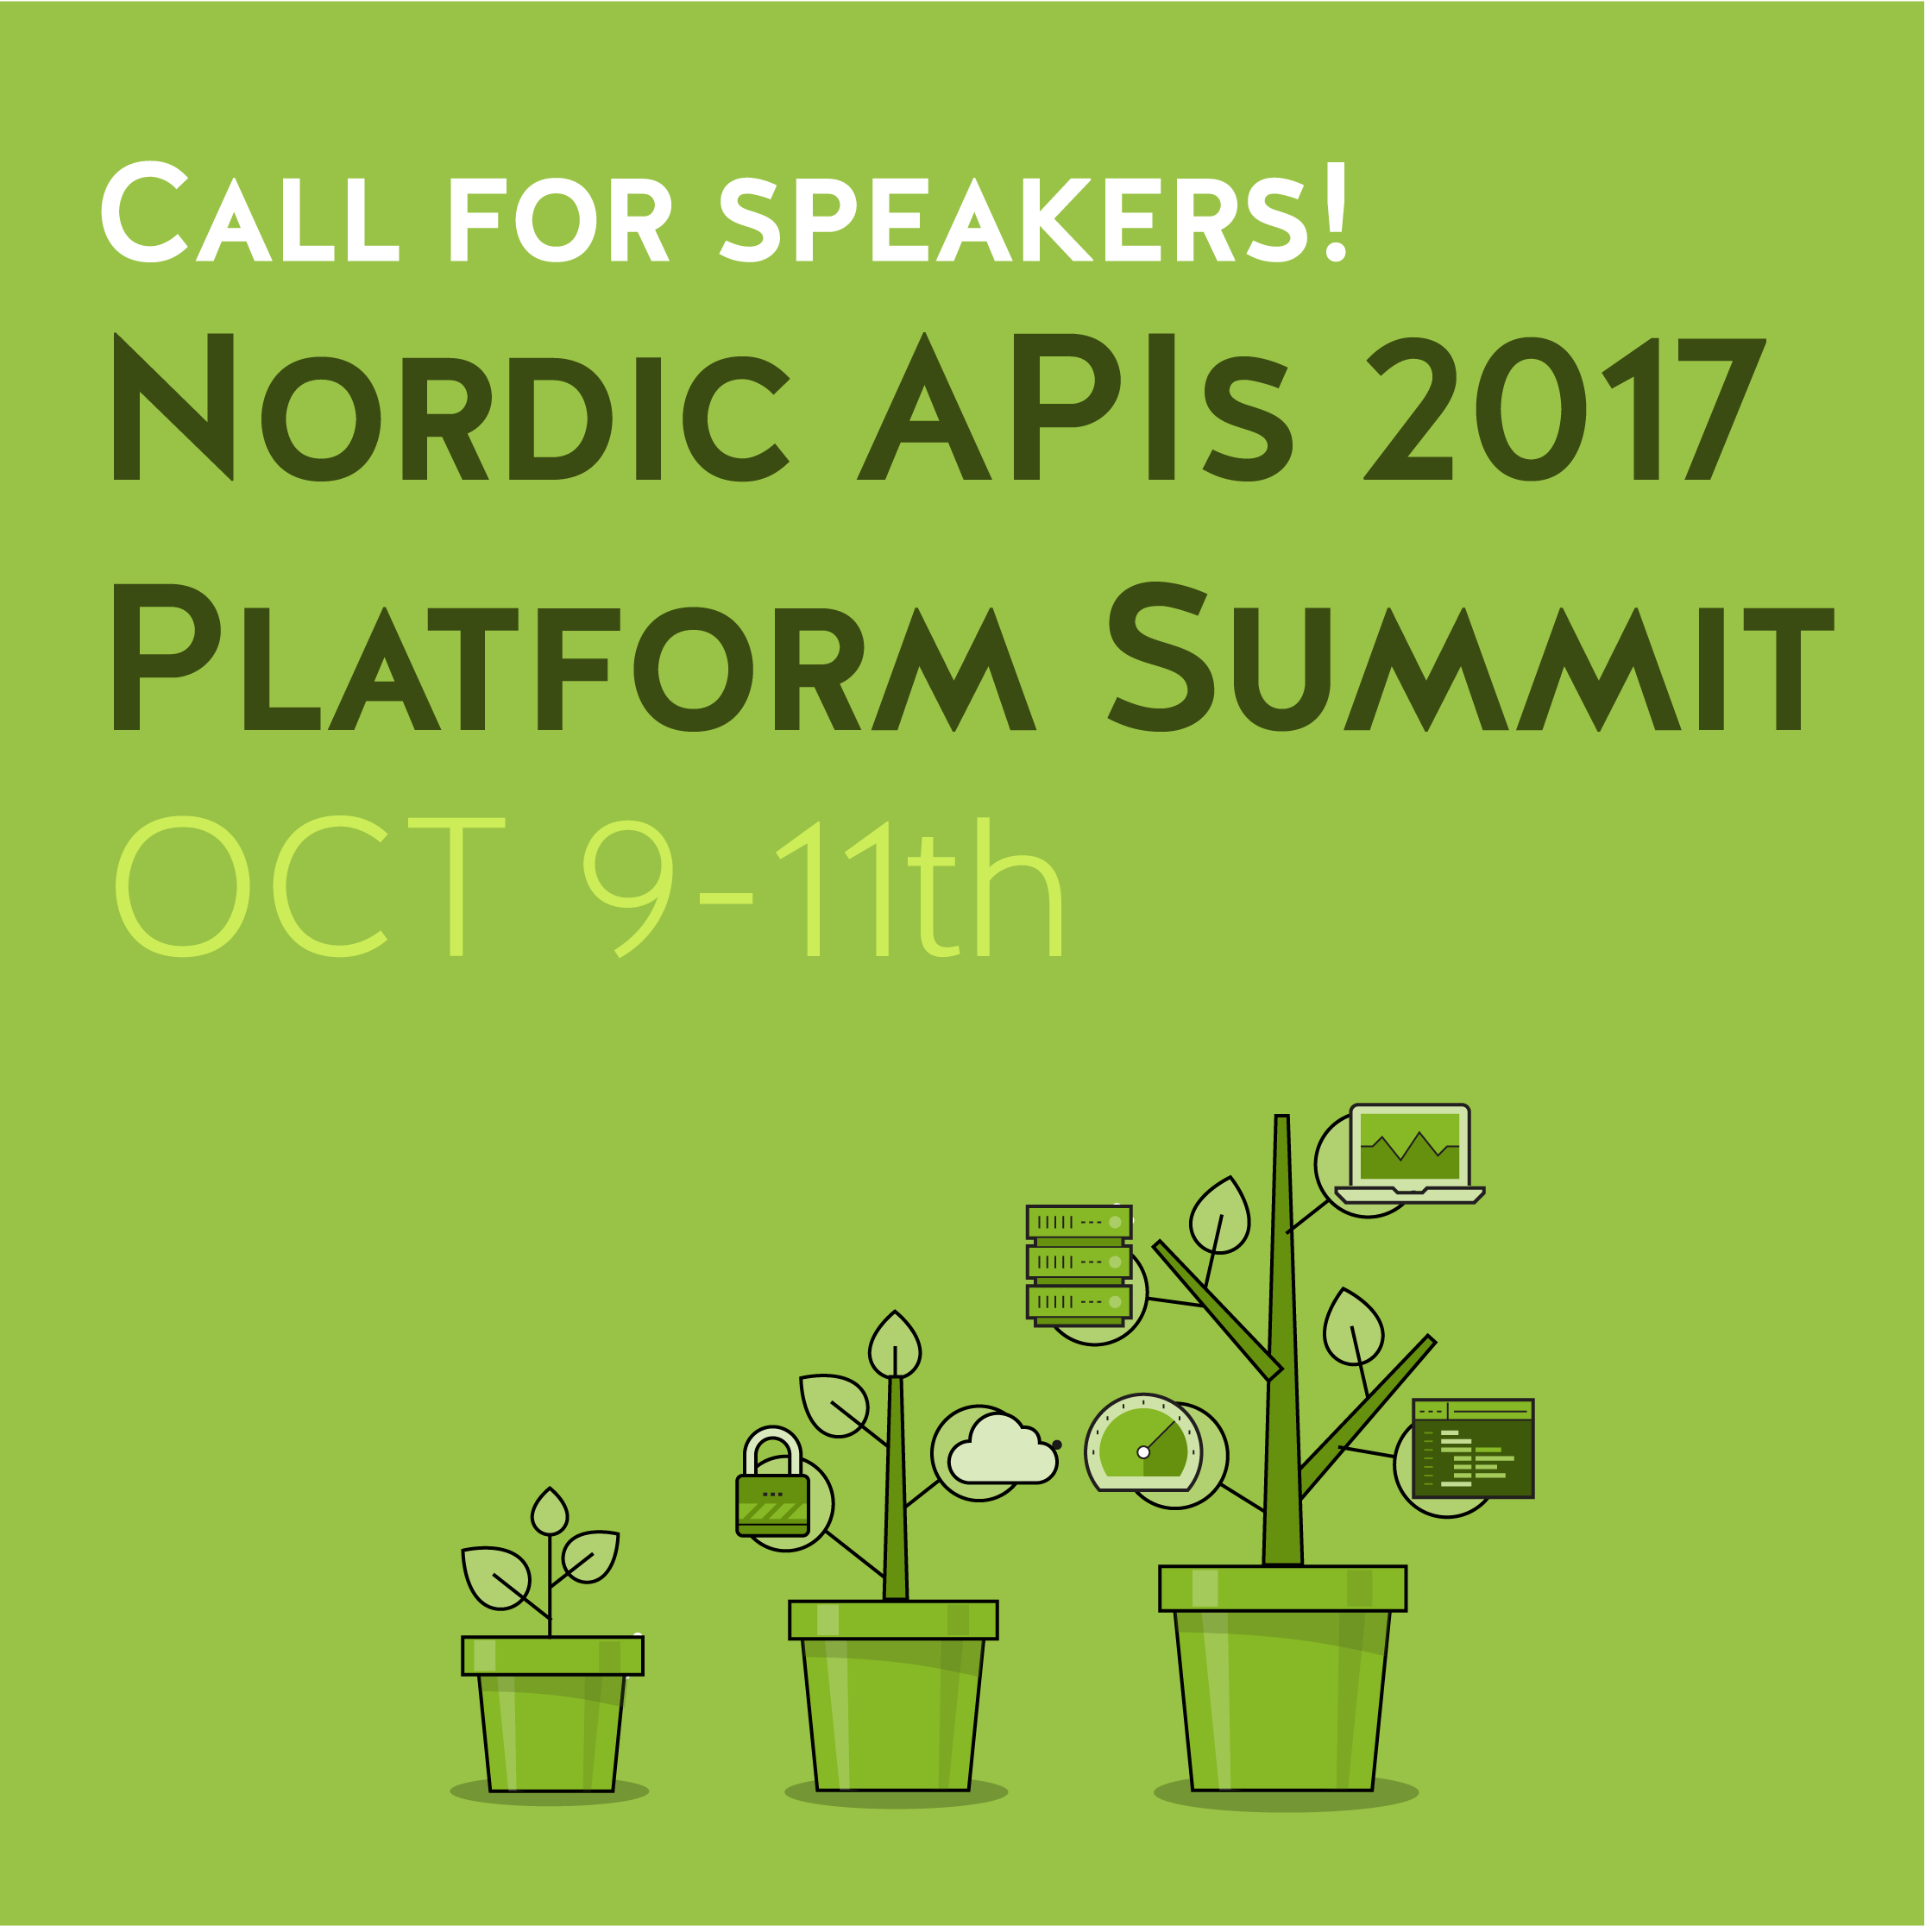 The 2017 Platform Summit Nordic APIs